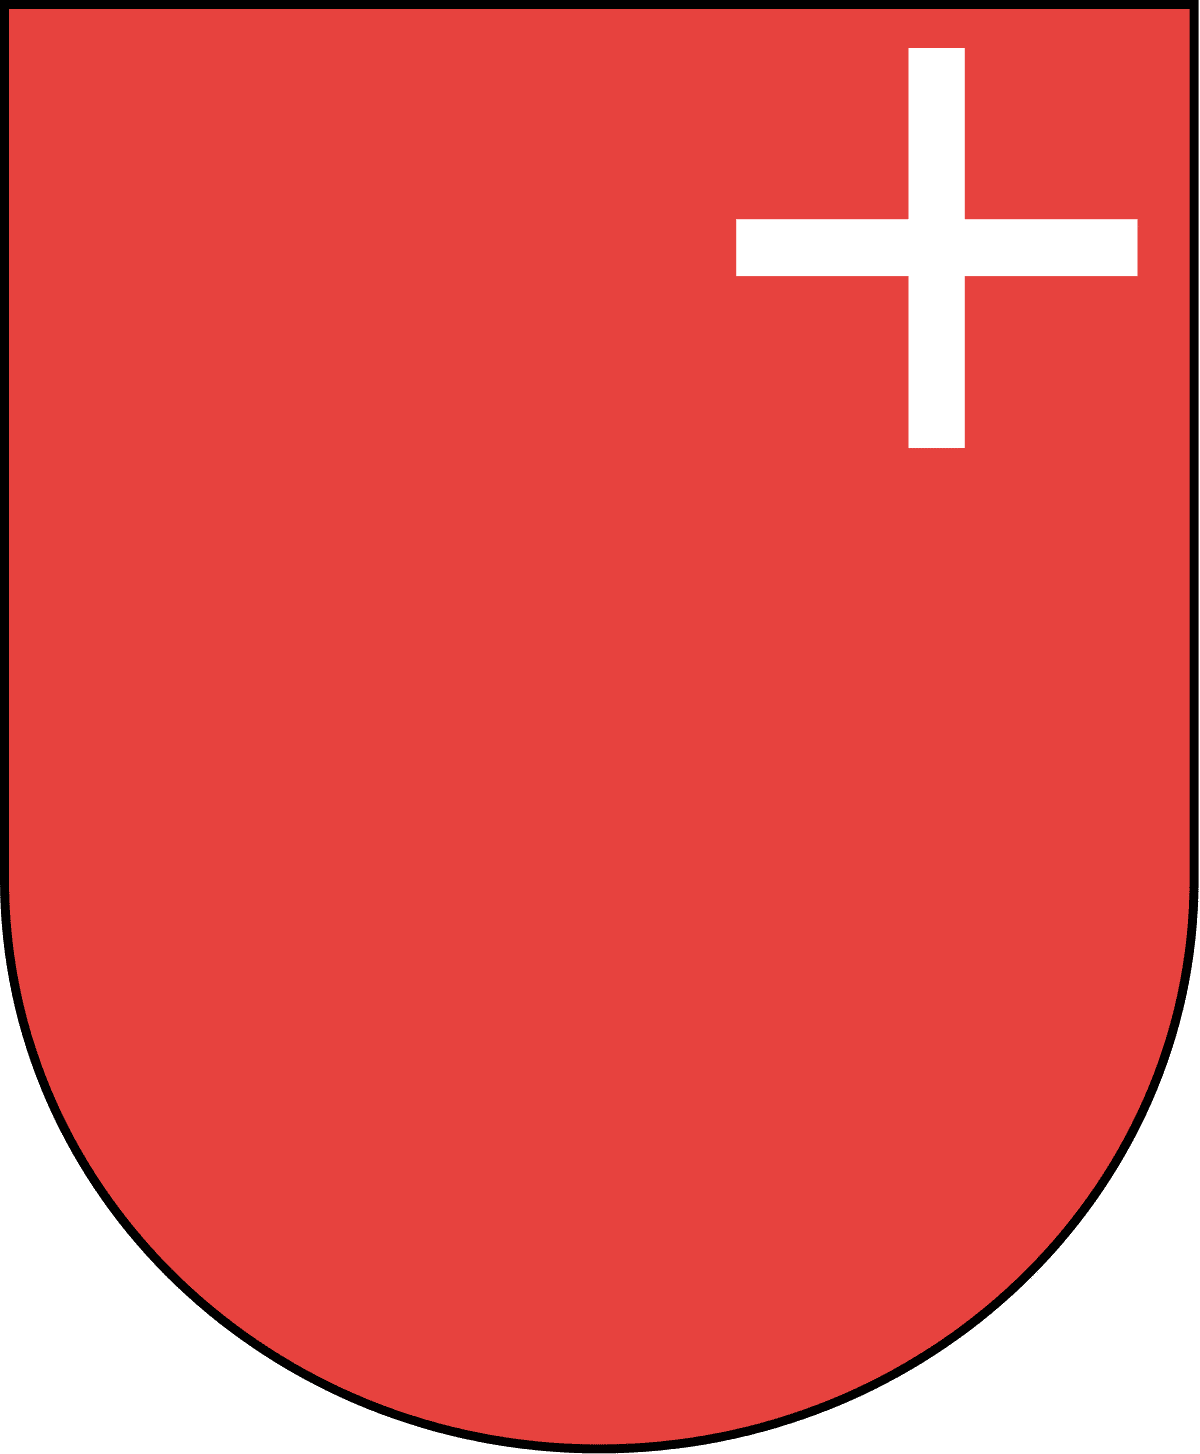 Wappen_des_Kantons_Schwyz.svg_